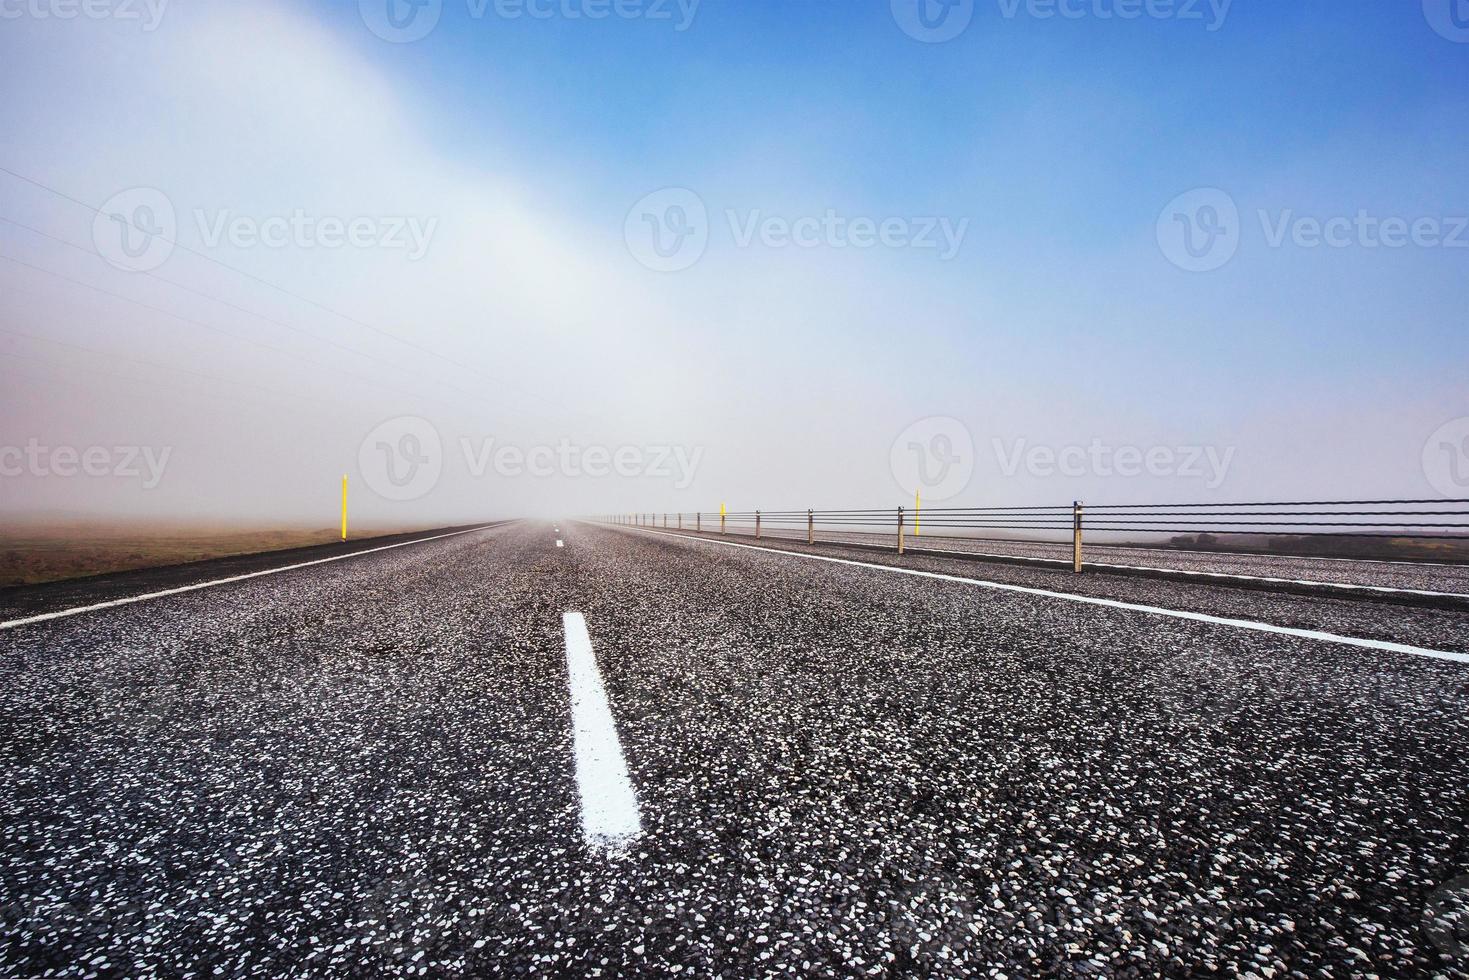 carretera asfaltada a las montañas islandia foto